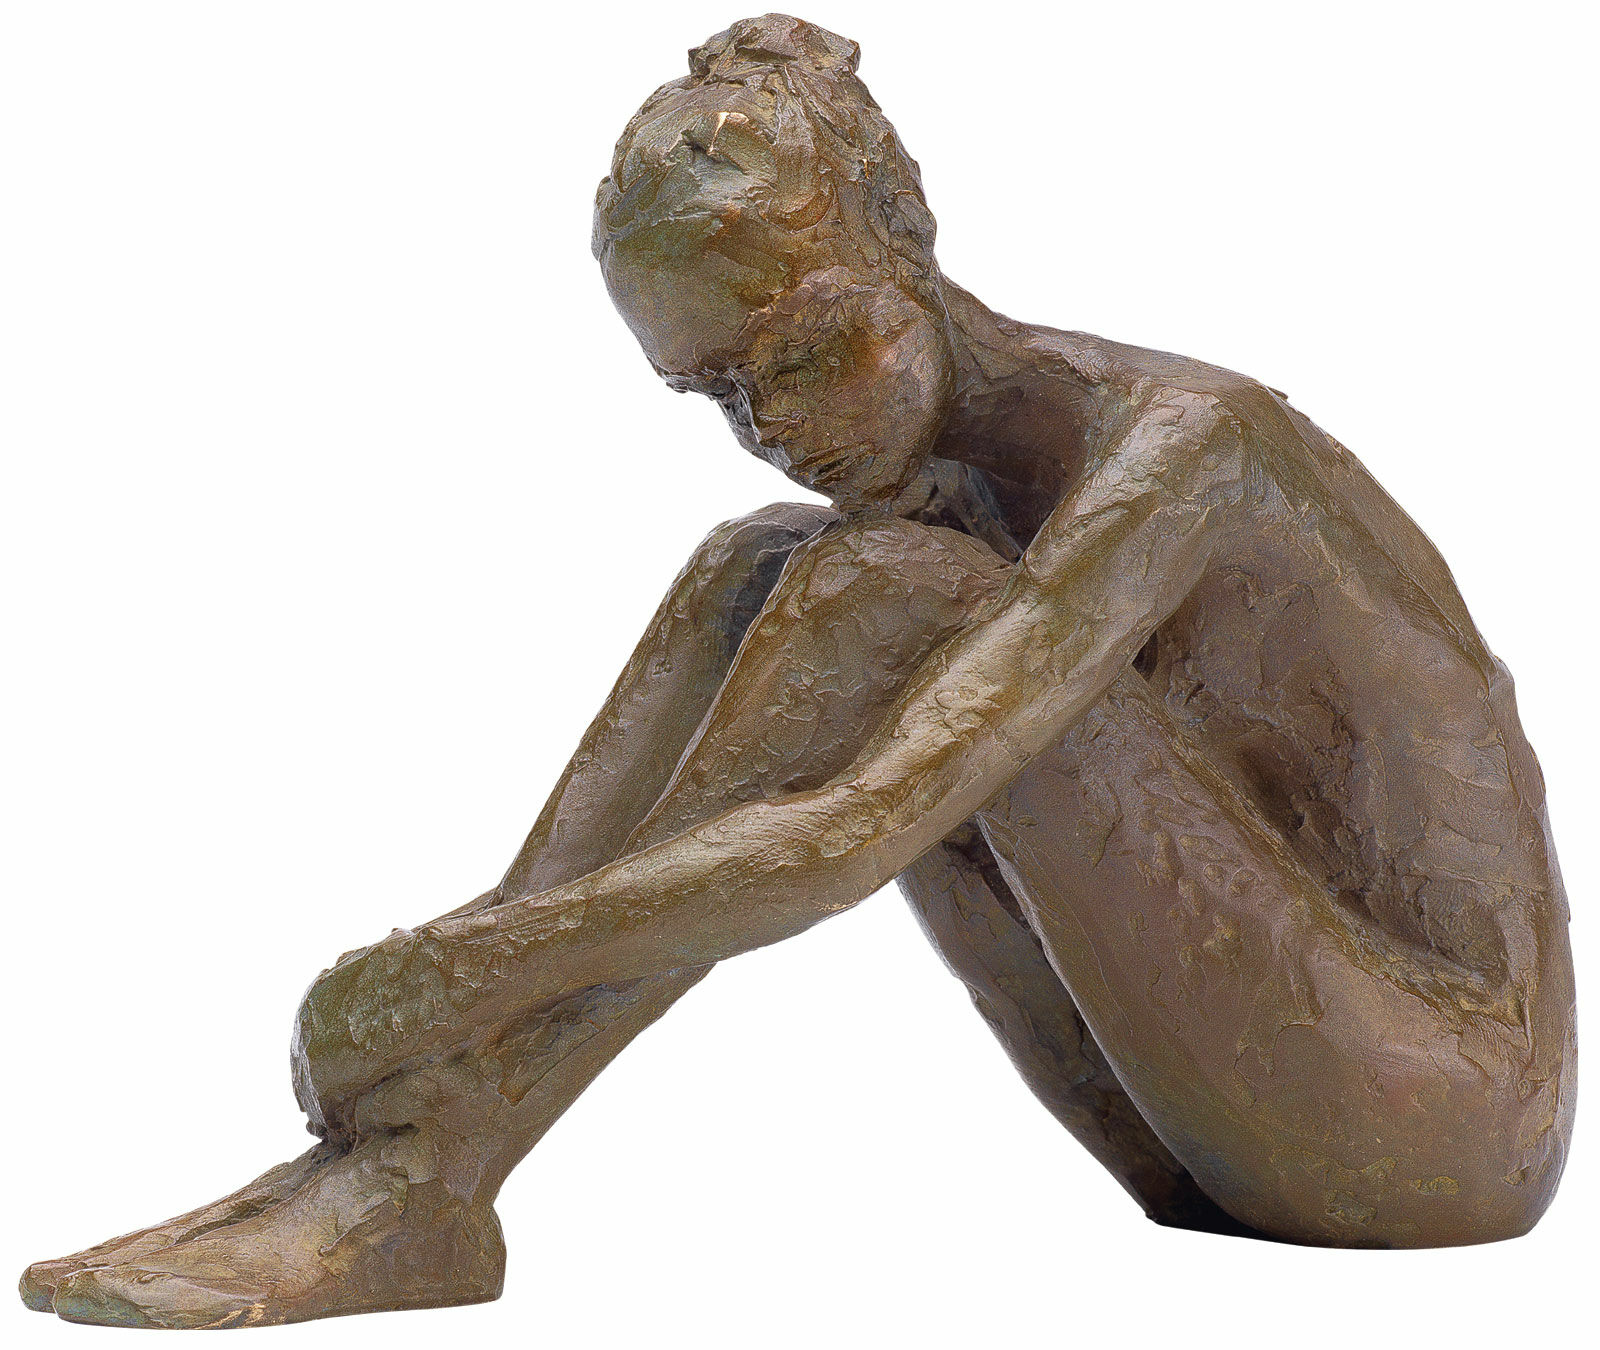 Sculpture "Inner Peace", bronze by Valerie Otte